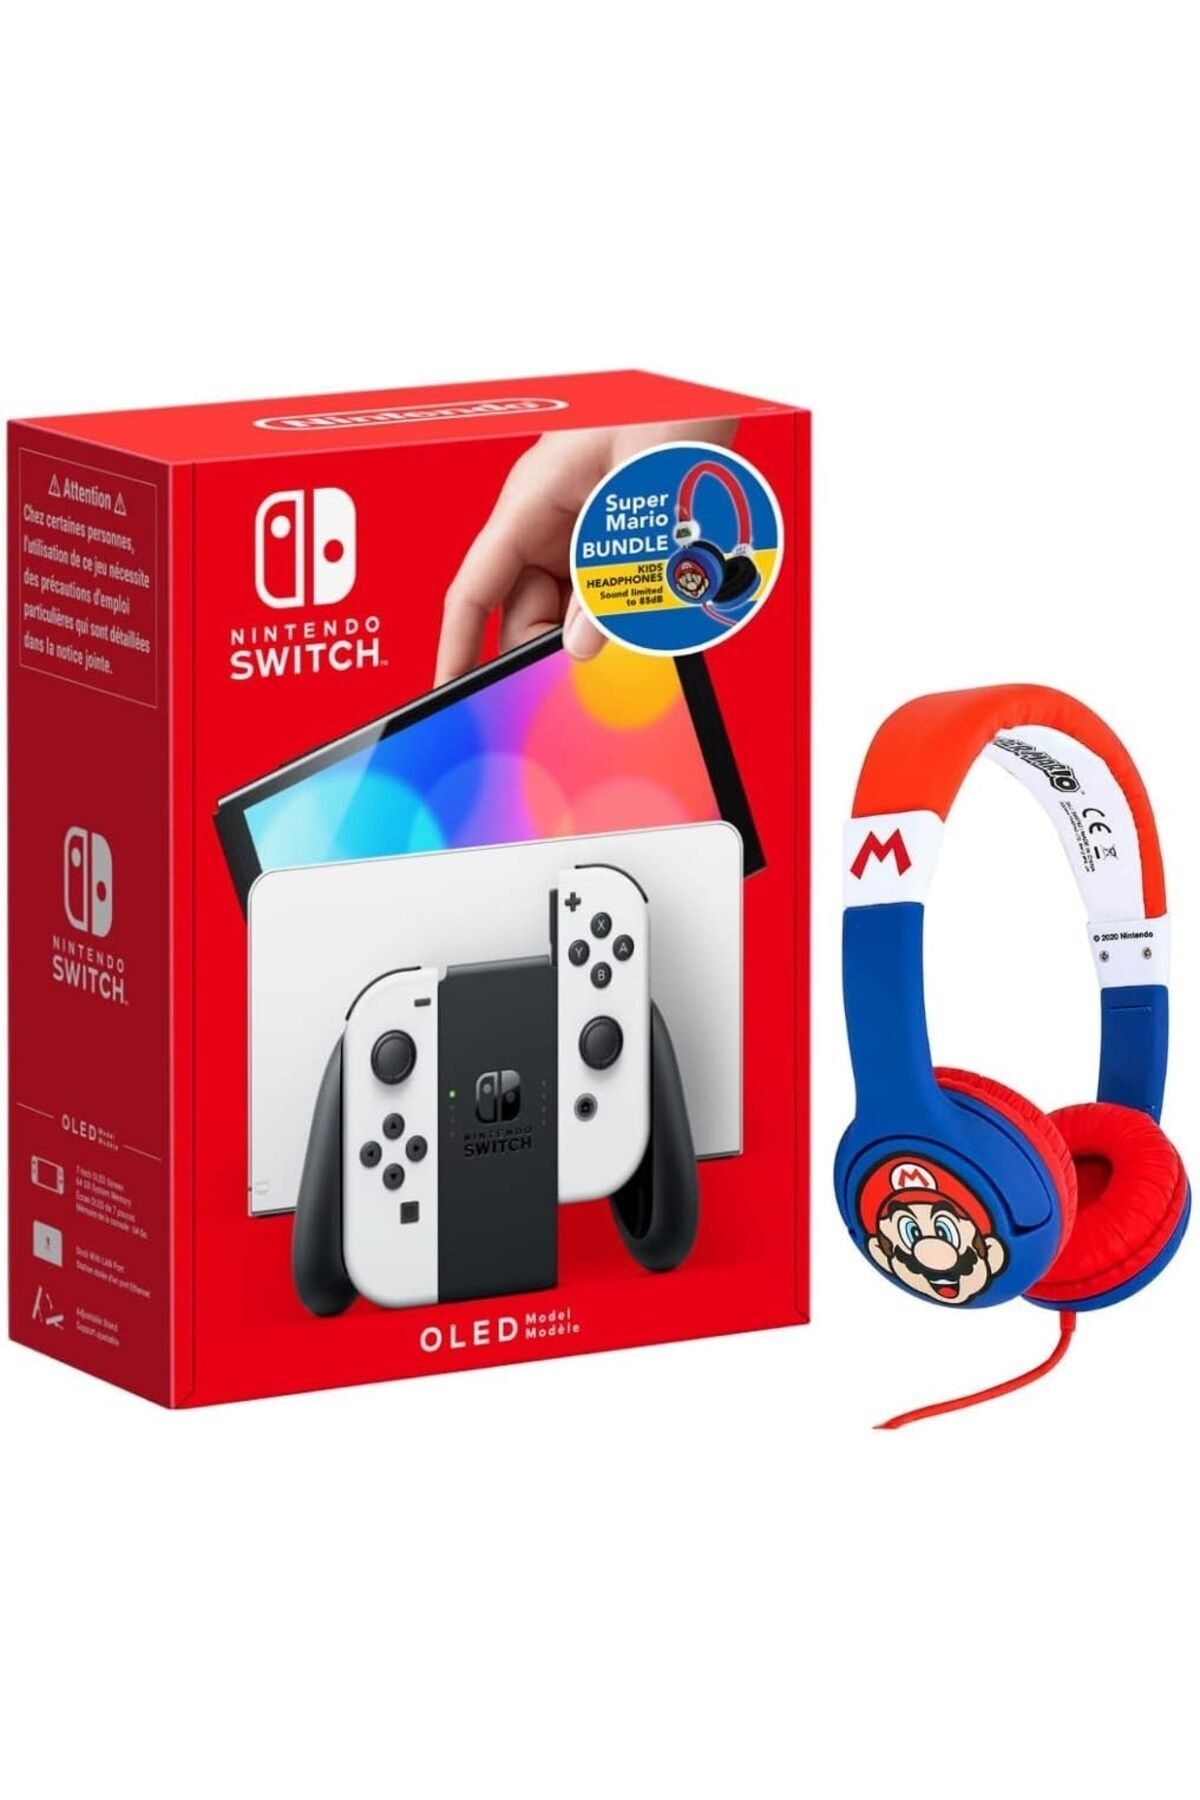 Nintendo Switch Konsol OLED Model White ve Super Mario Kulaklık Bundle Paket (distribütör Garantili)